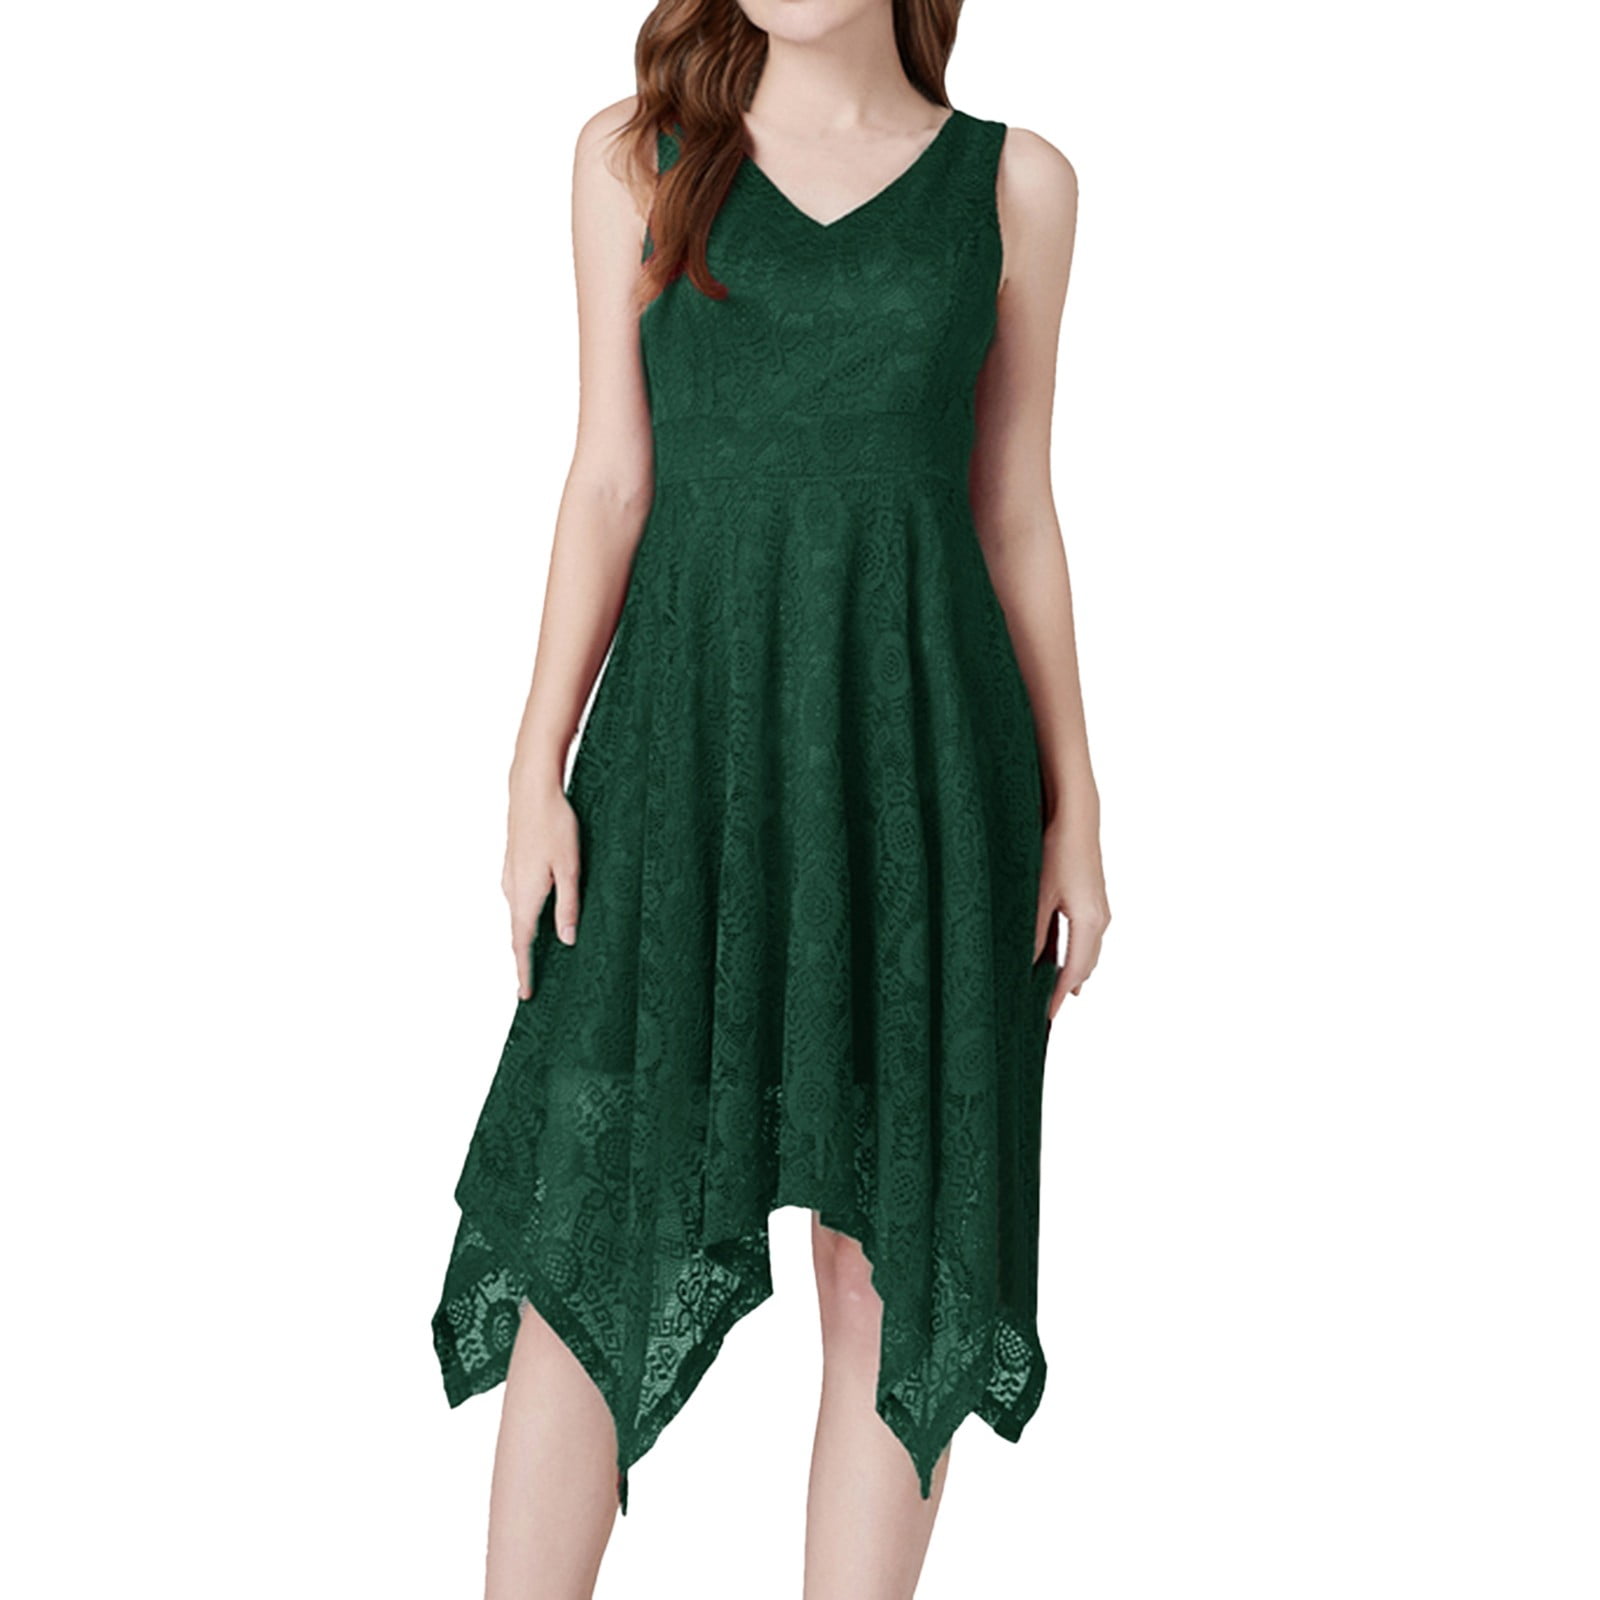 green dresses for teens